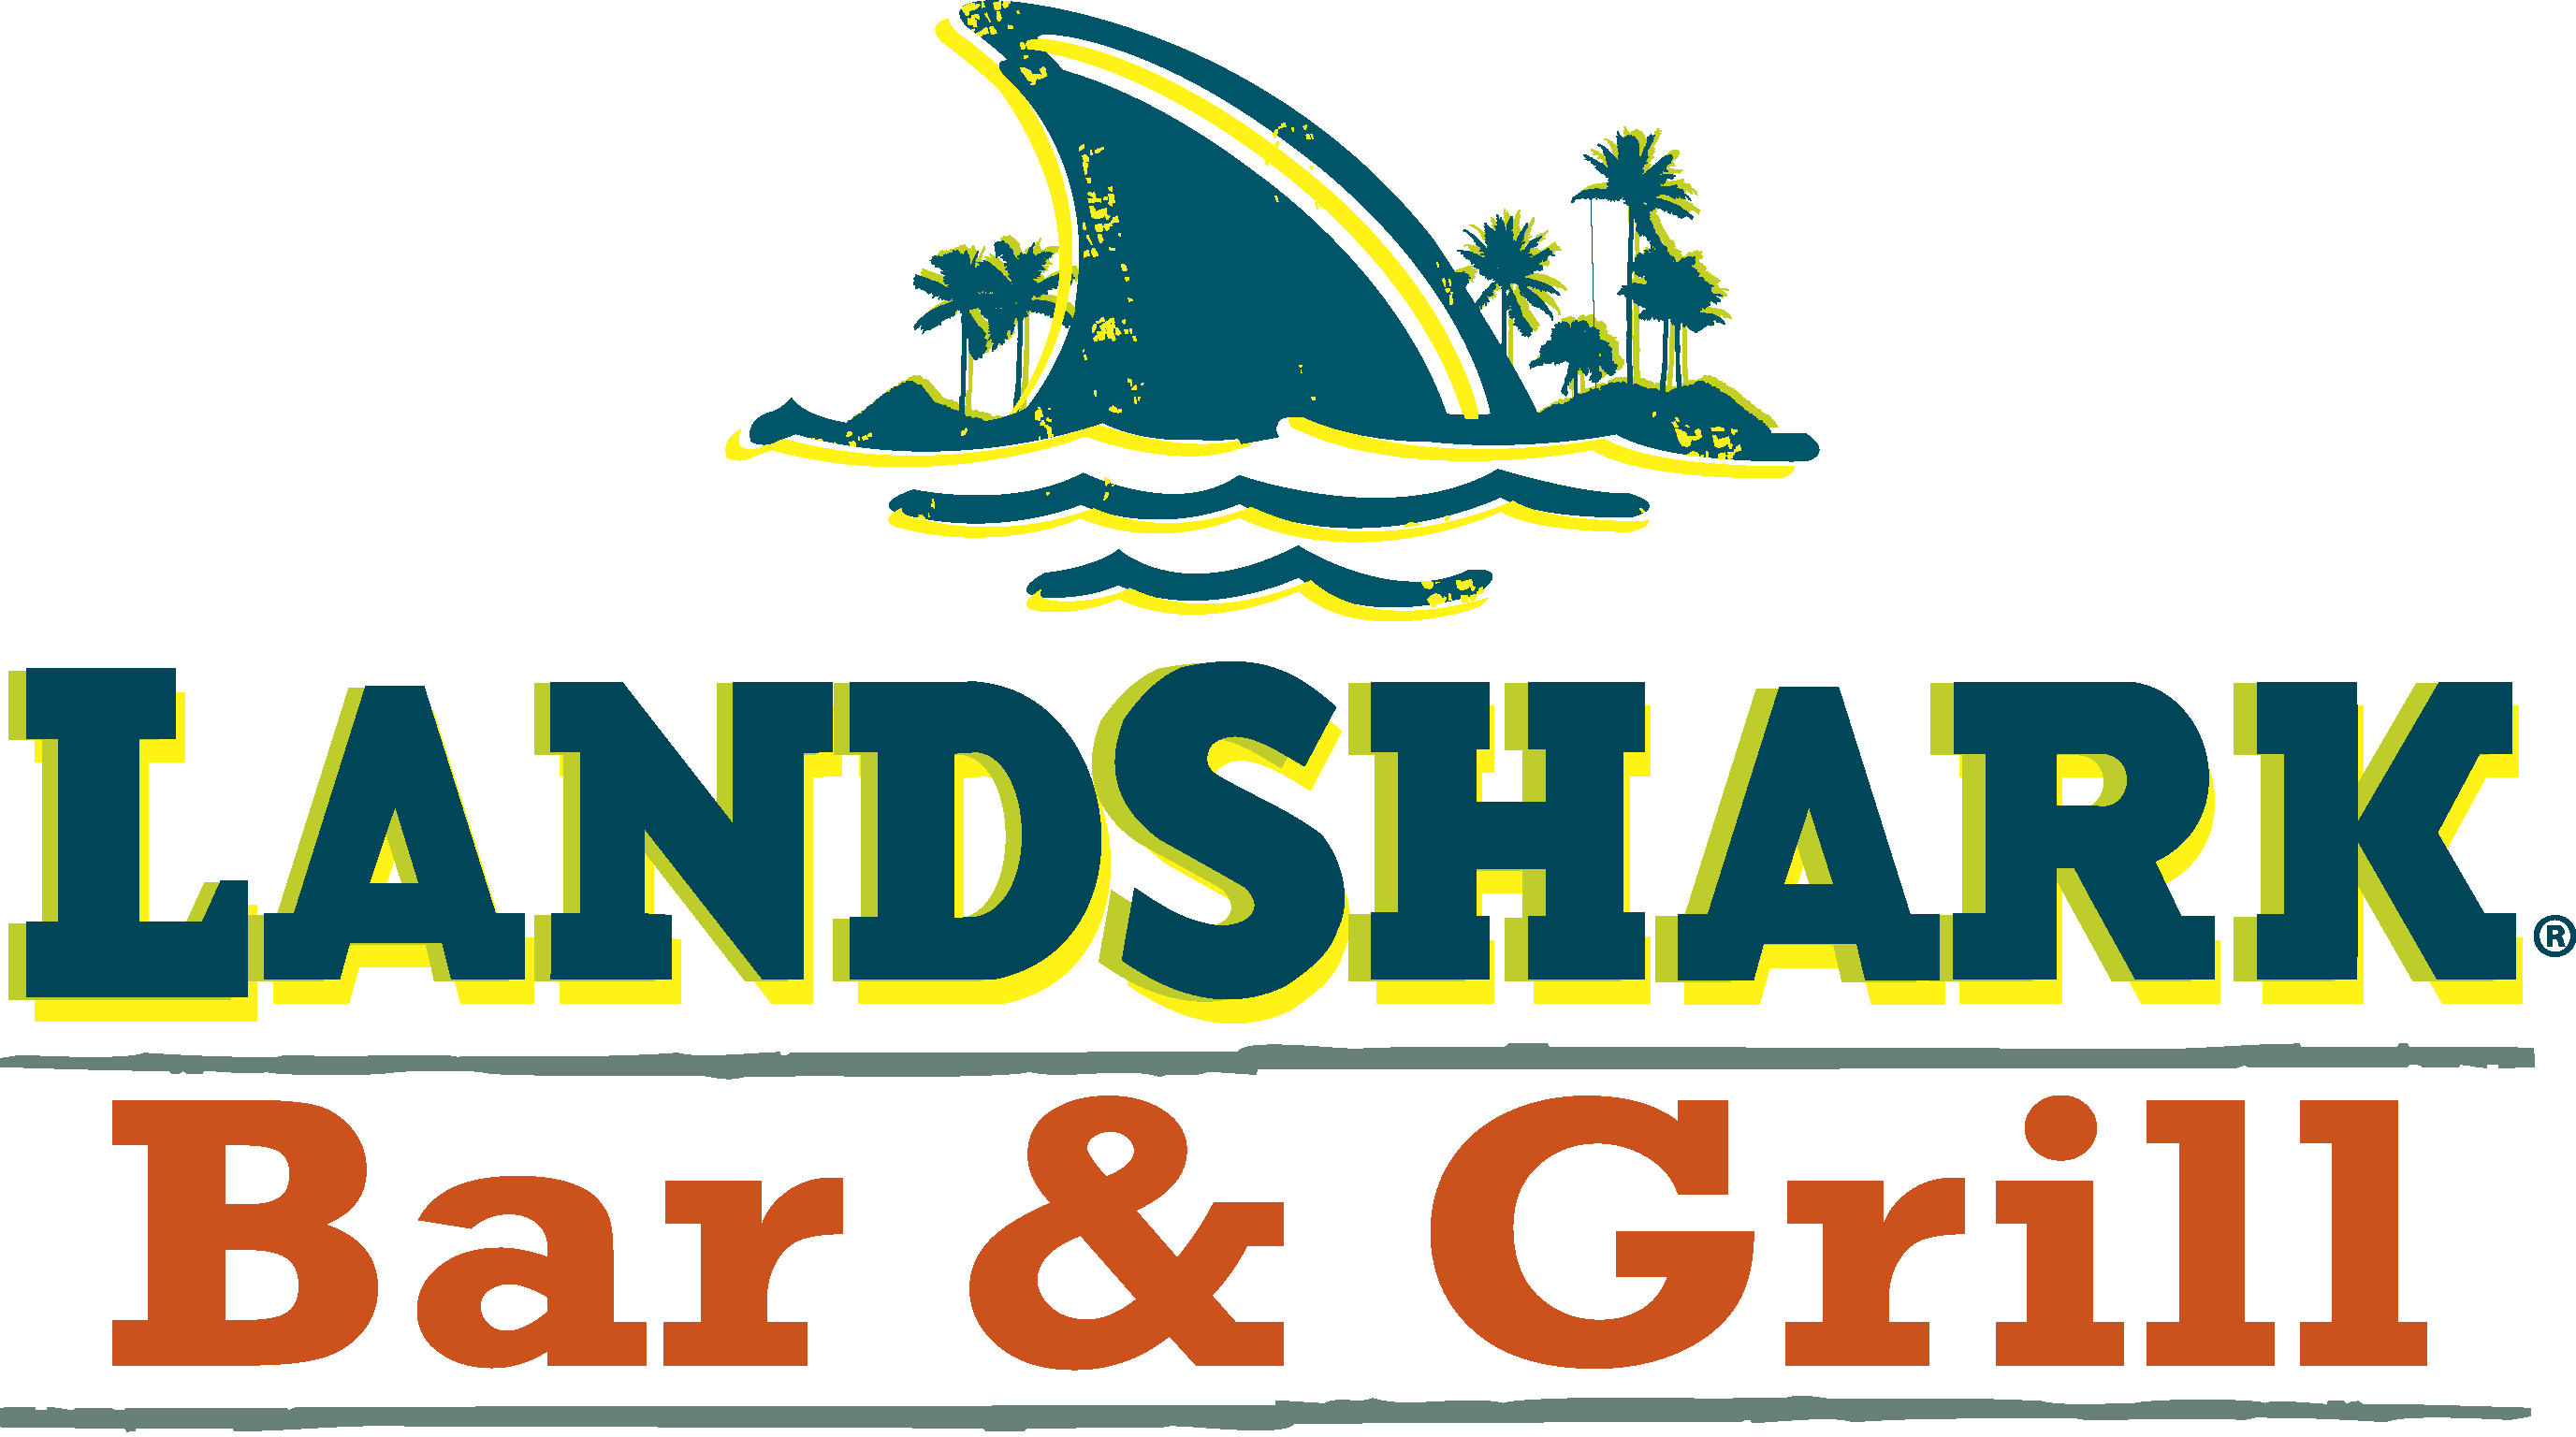 Land Shark Bar Grill San Diego logo _ Acoustic Spot Talent